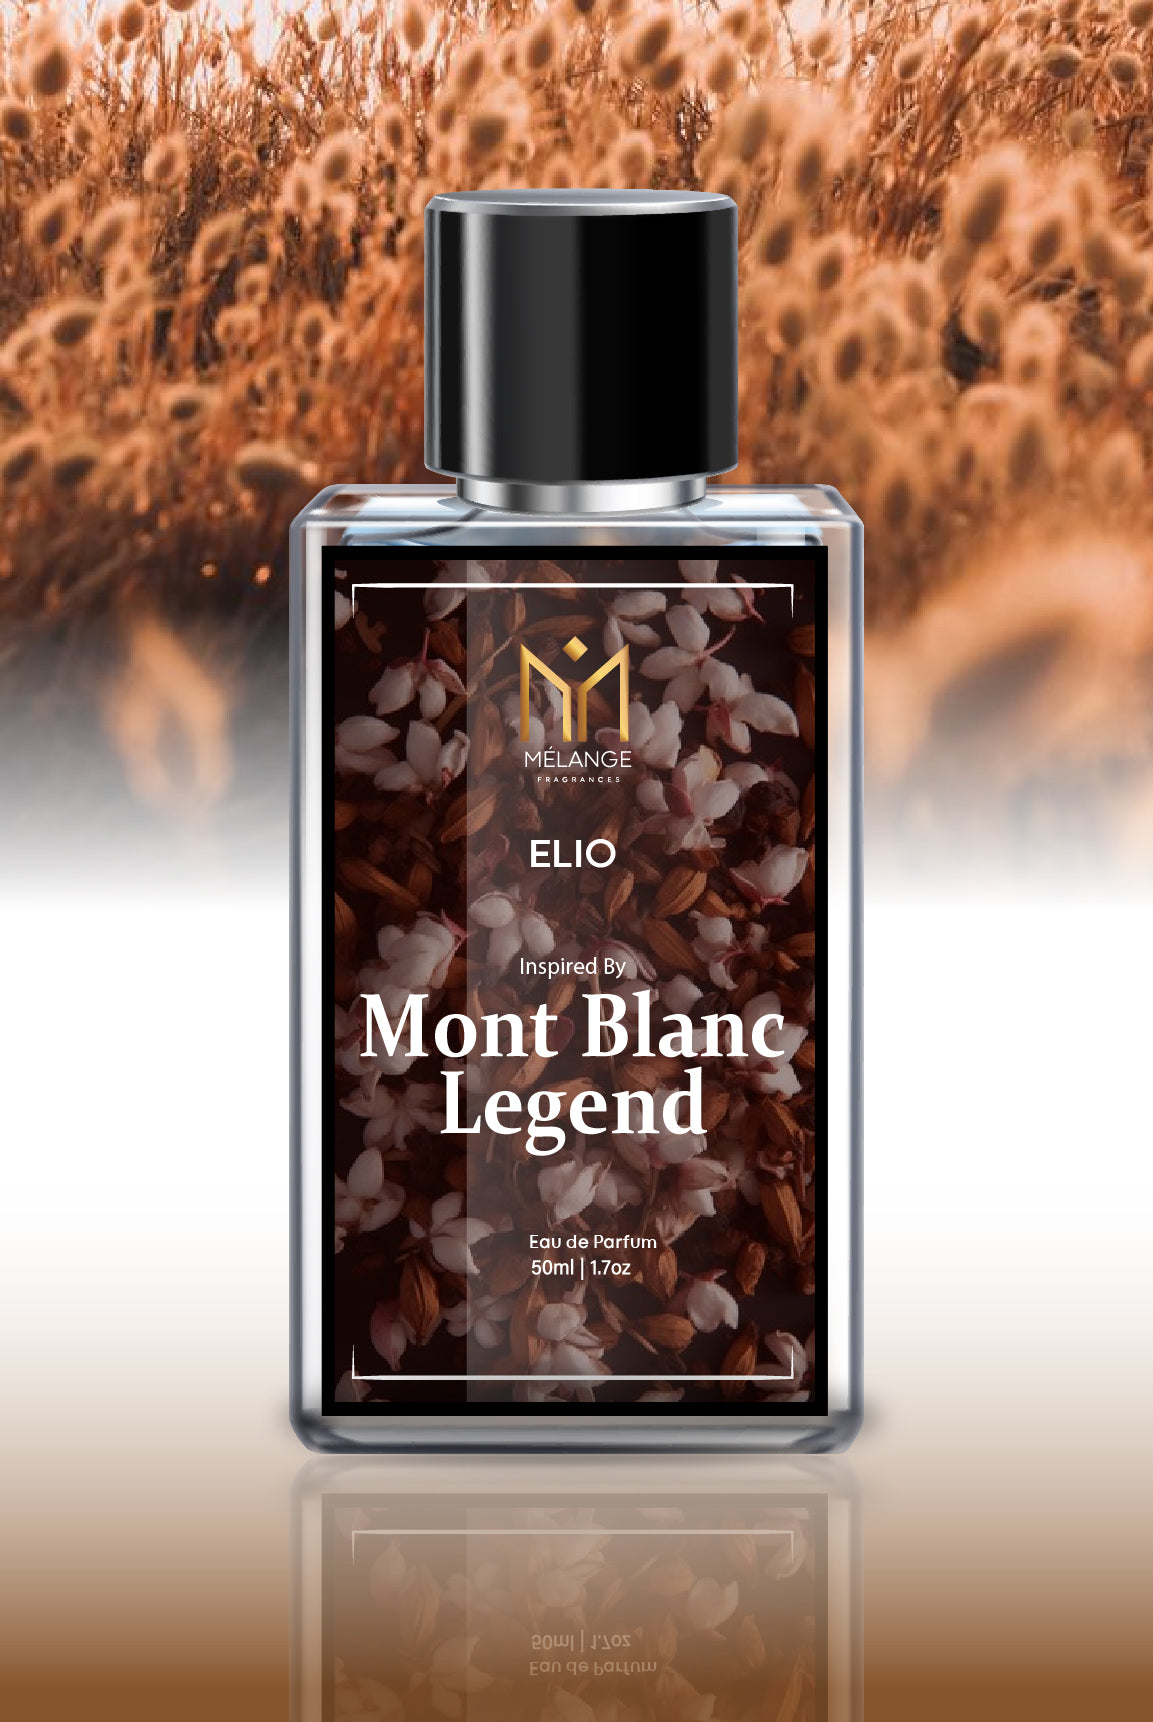 ELIO- Inspired by Mont Blanc Legend